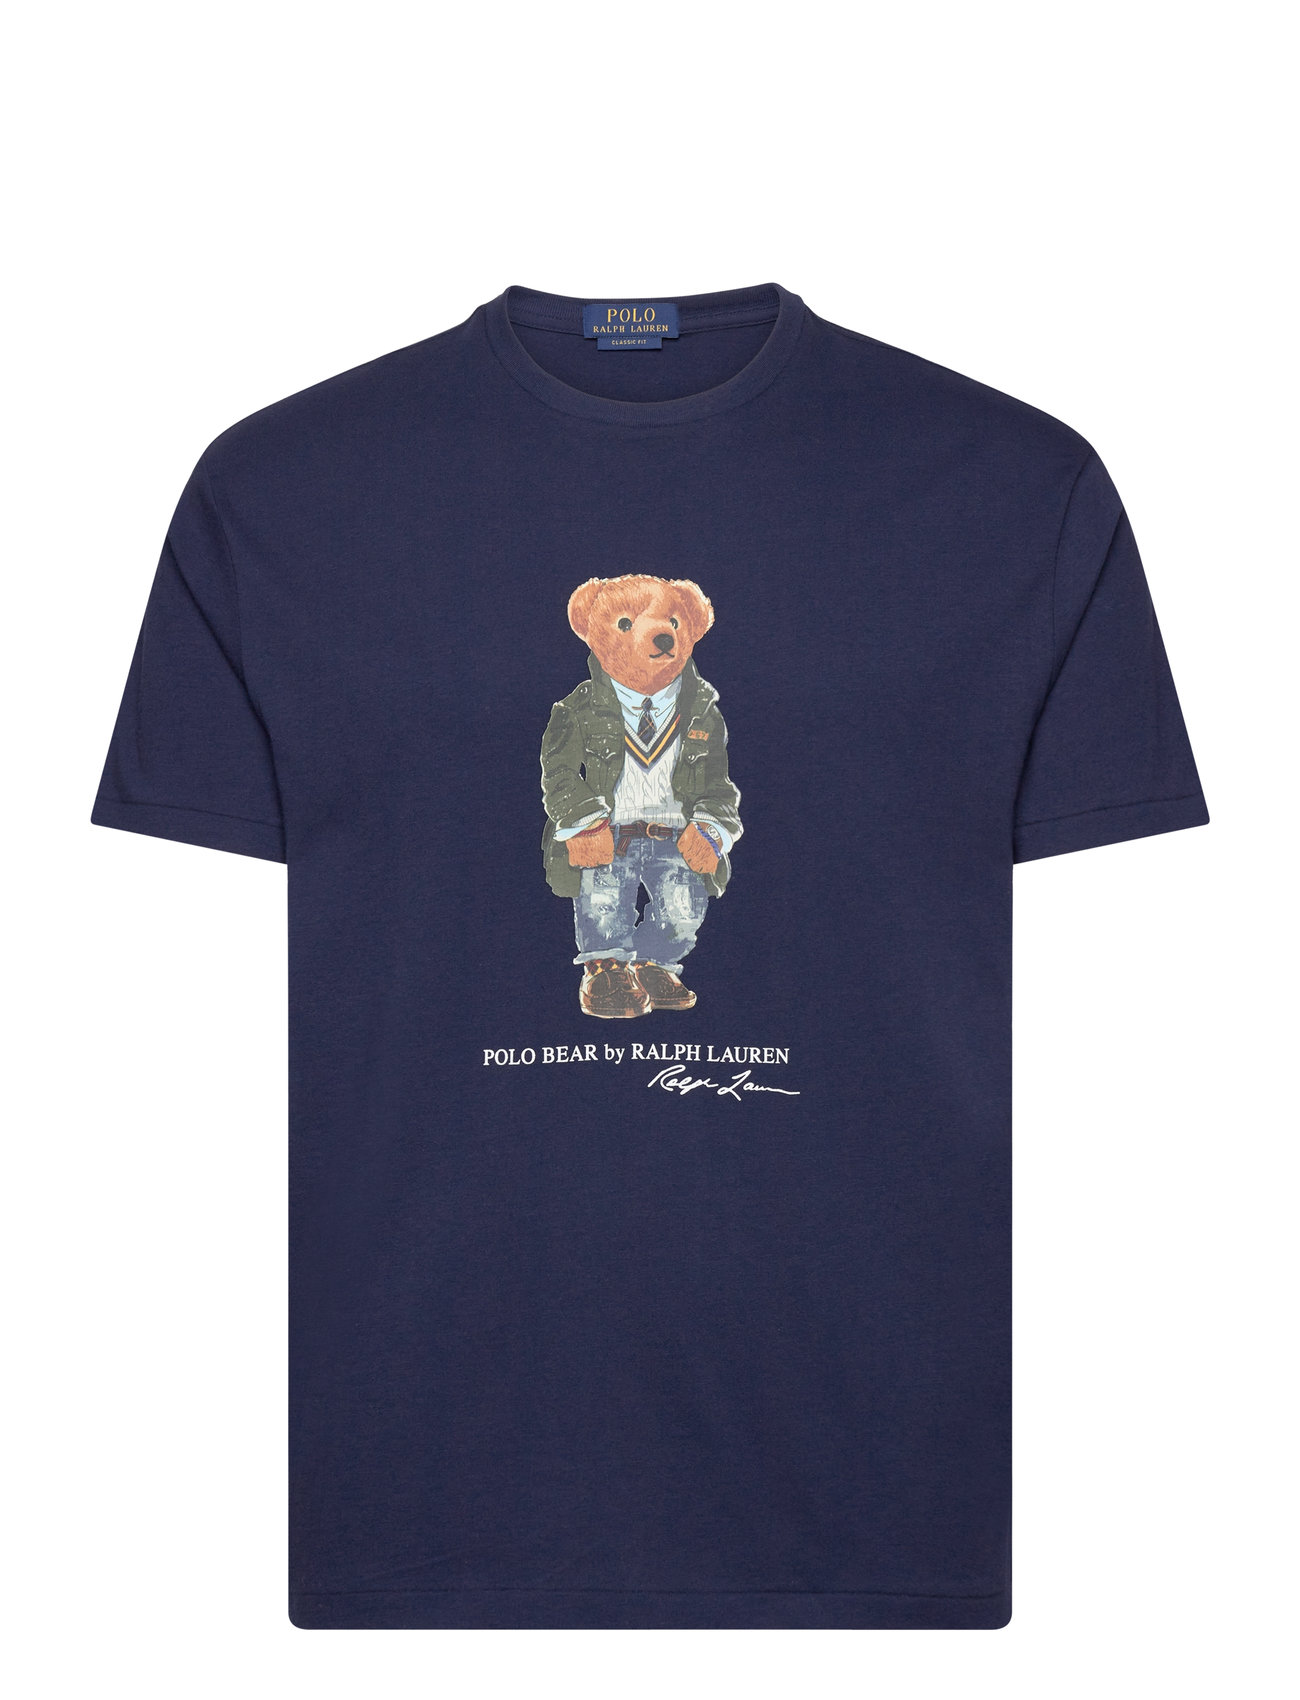 Classic Fit Polo Bear Jersey T-Shirt Tops T-shirts Short-sleeved Navy Polo Ralph Lauren